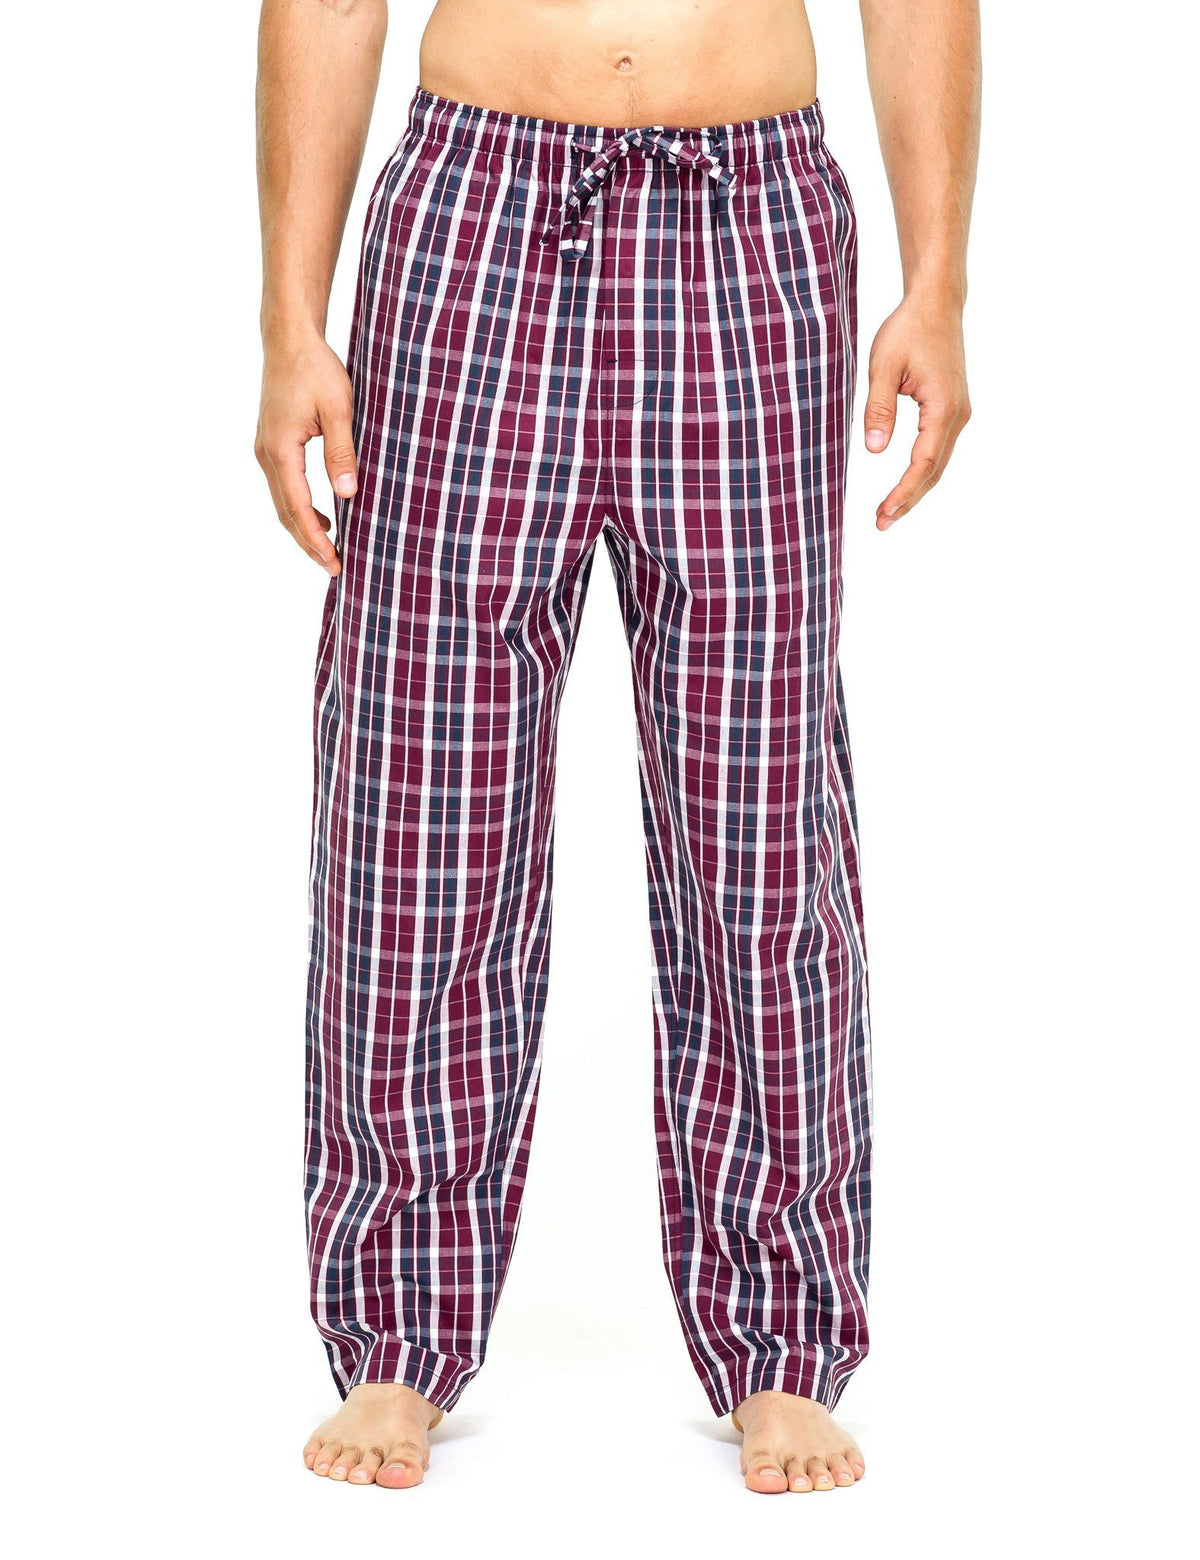 Men's 100% Cotton Comfort-Fit Sleep/Lounge Pants - Burgundy-Navy Plaid